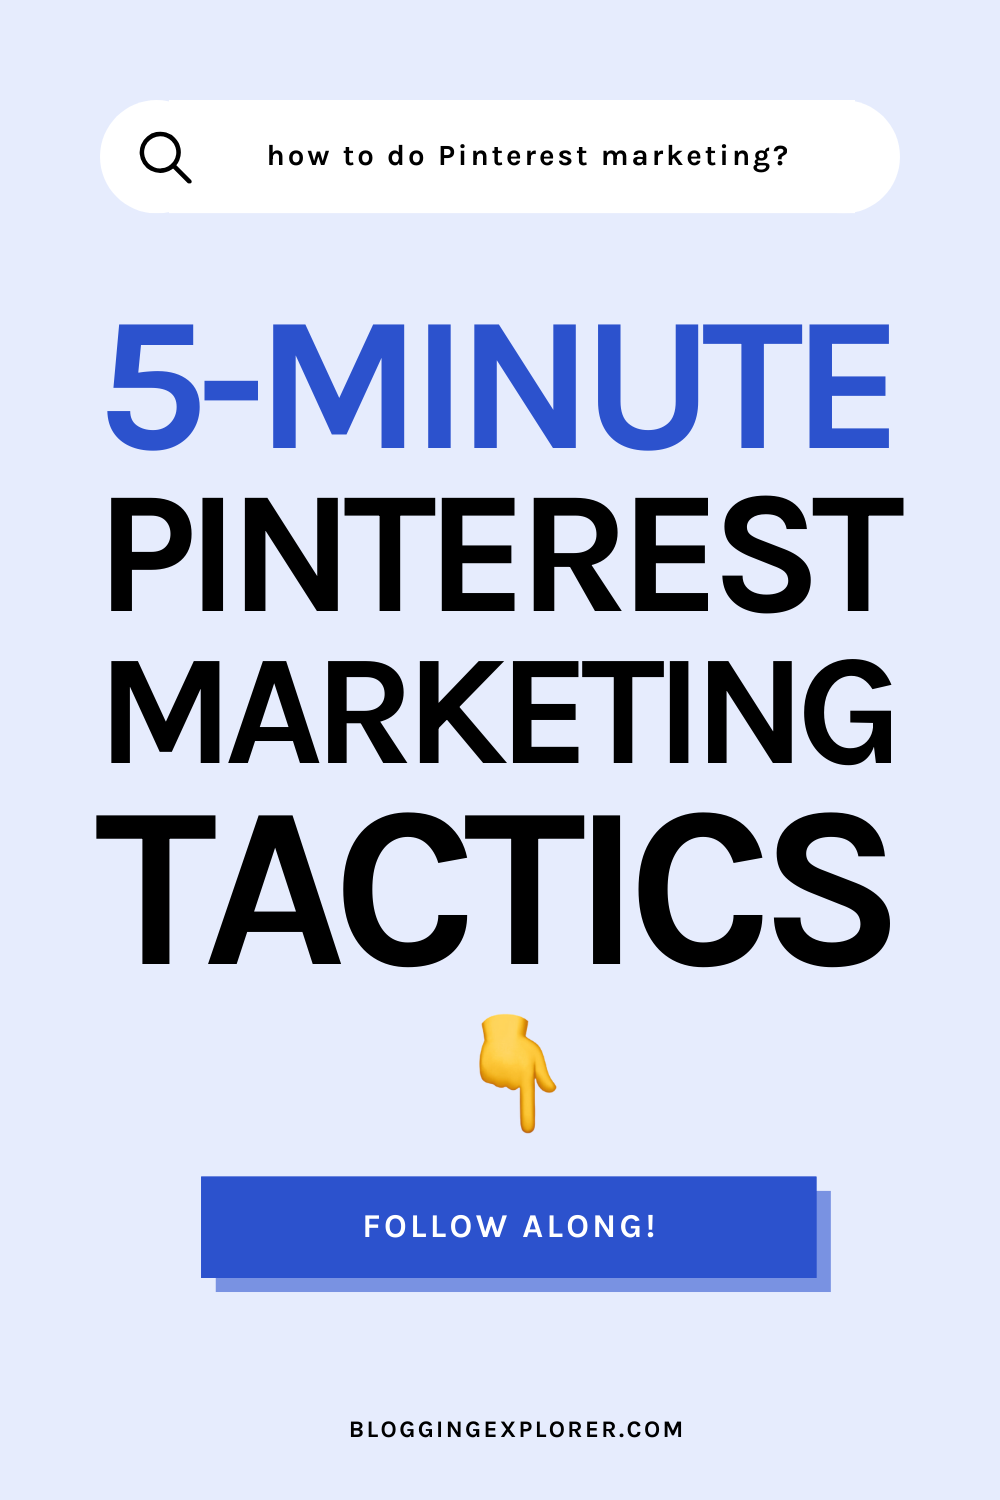 Quick 5-minute Pinterest marketing tactics to grow blog traffic